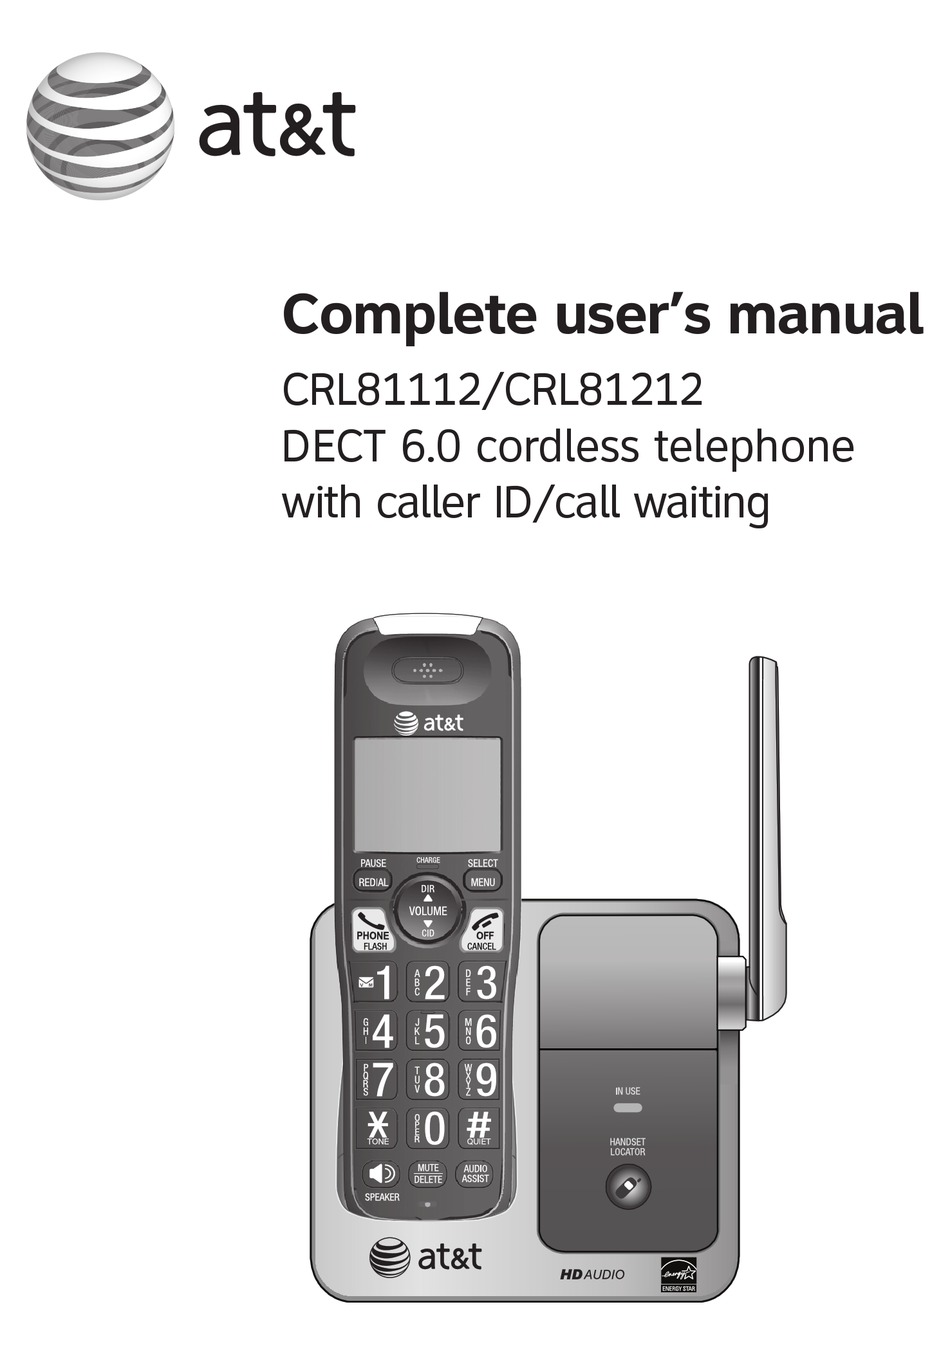 AT&T CRL81112 COMPLETE USER'S MANUAL Pdf Download | ManualsLib